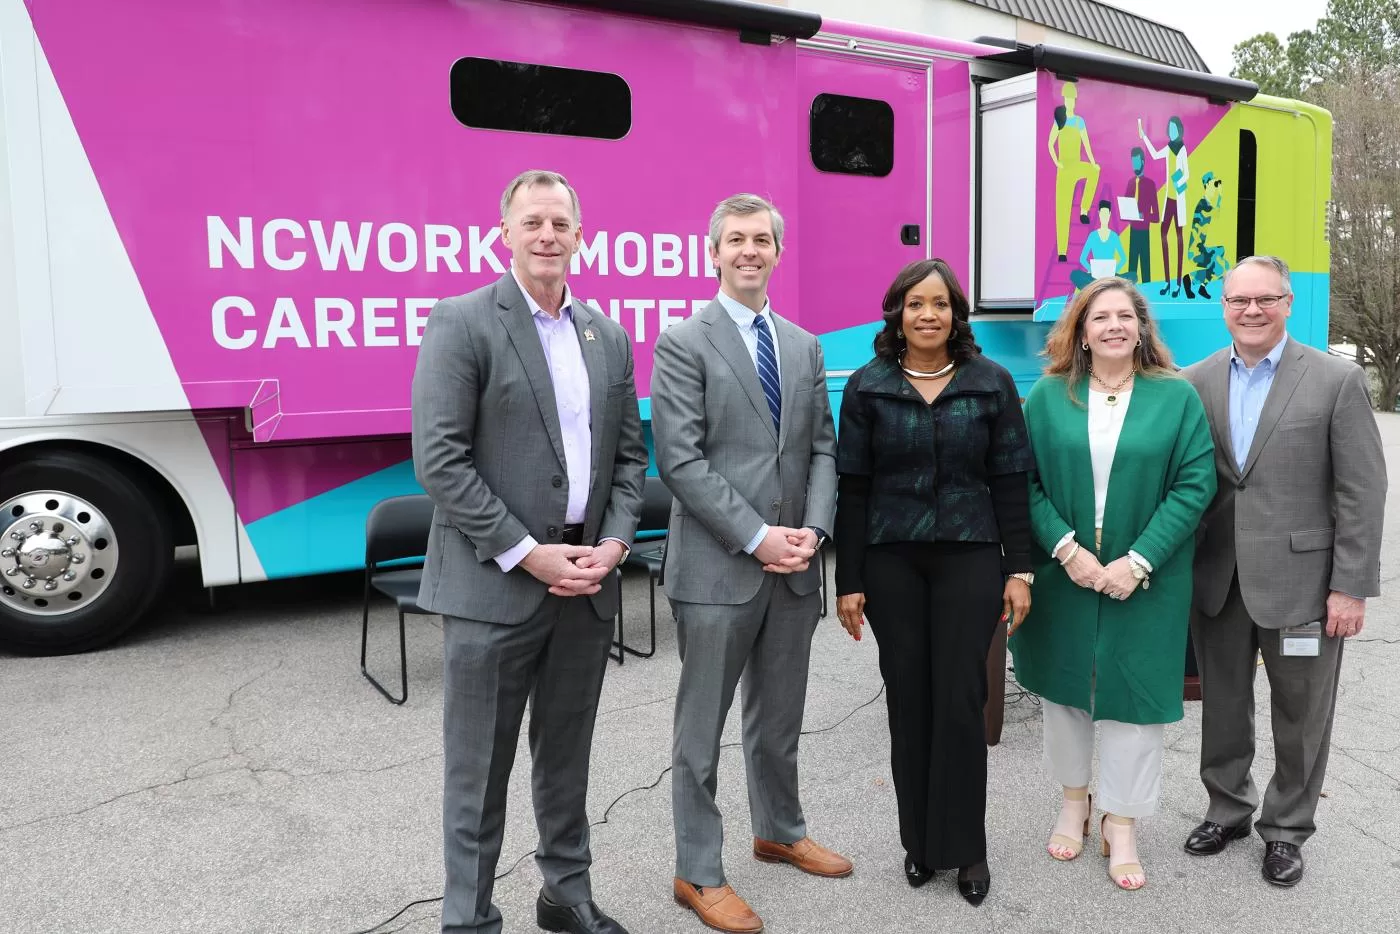 N.C. Commerce Secretary Celebrates NCWorks Mobile Career Center’s First Year of Service